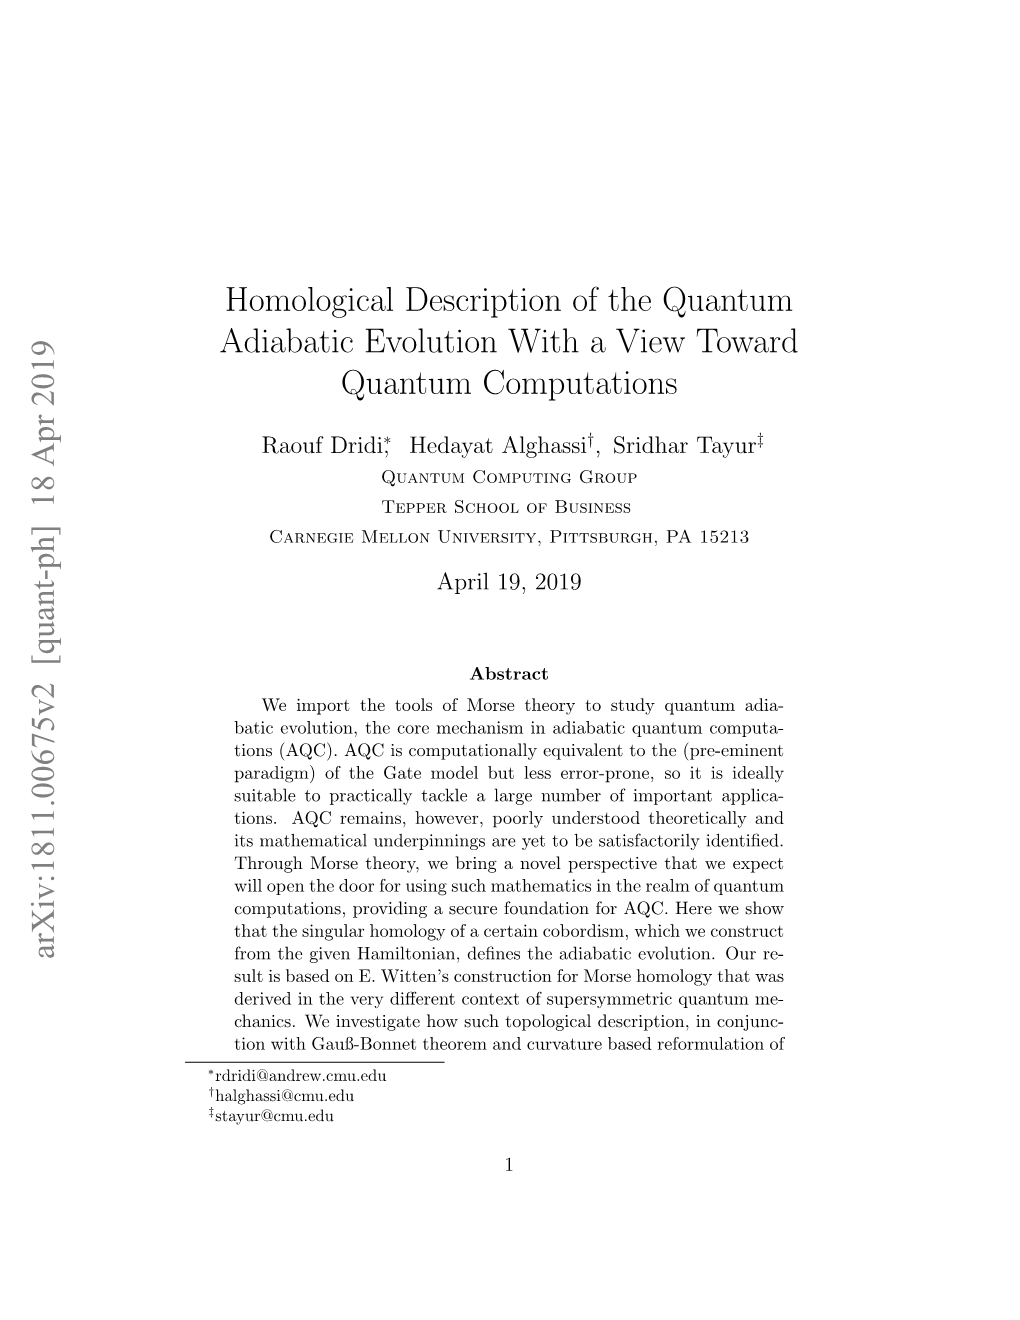 Homological Description of the Quantum Adiabatic Evolution with a View Toward Quantum Computations